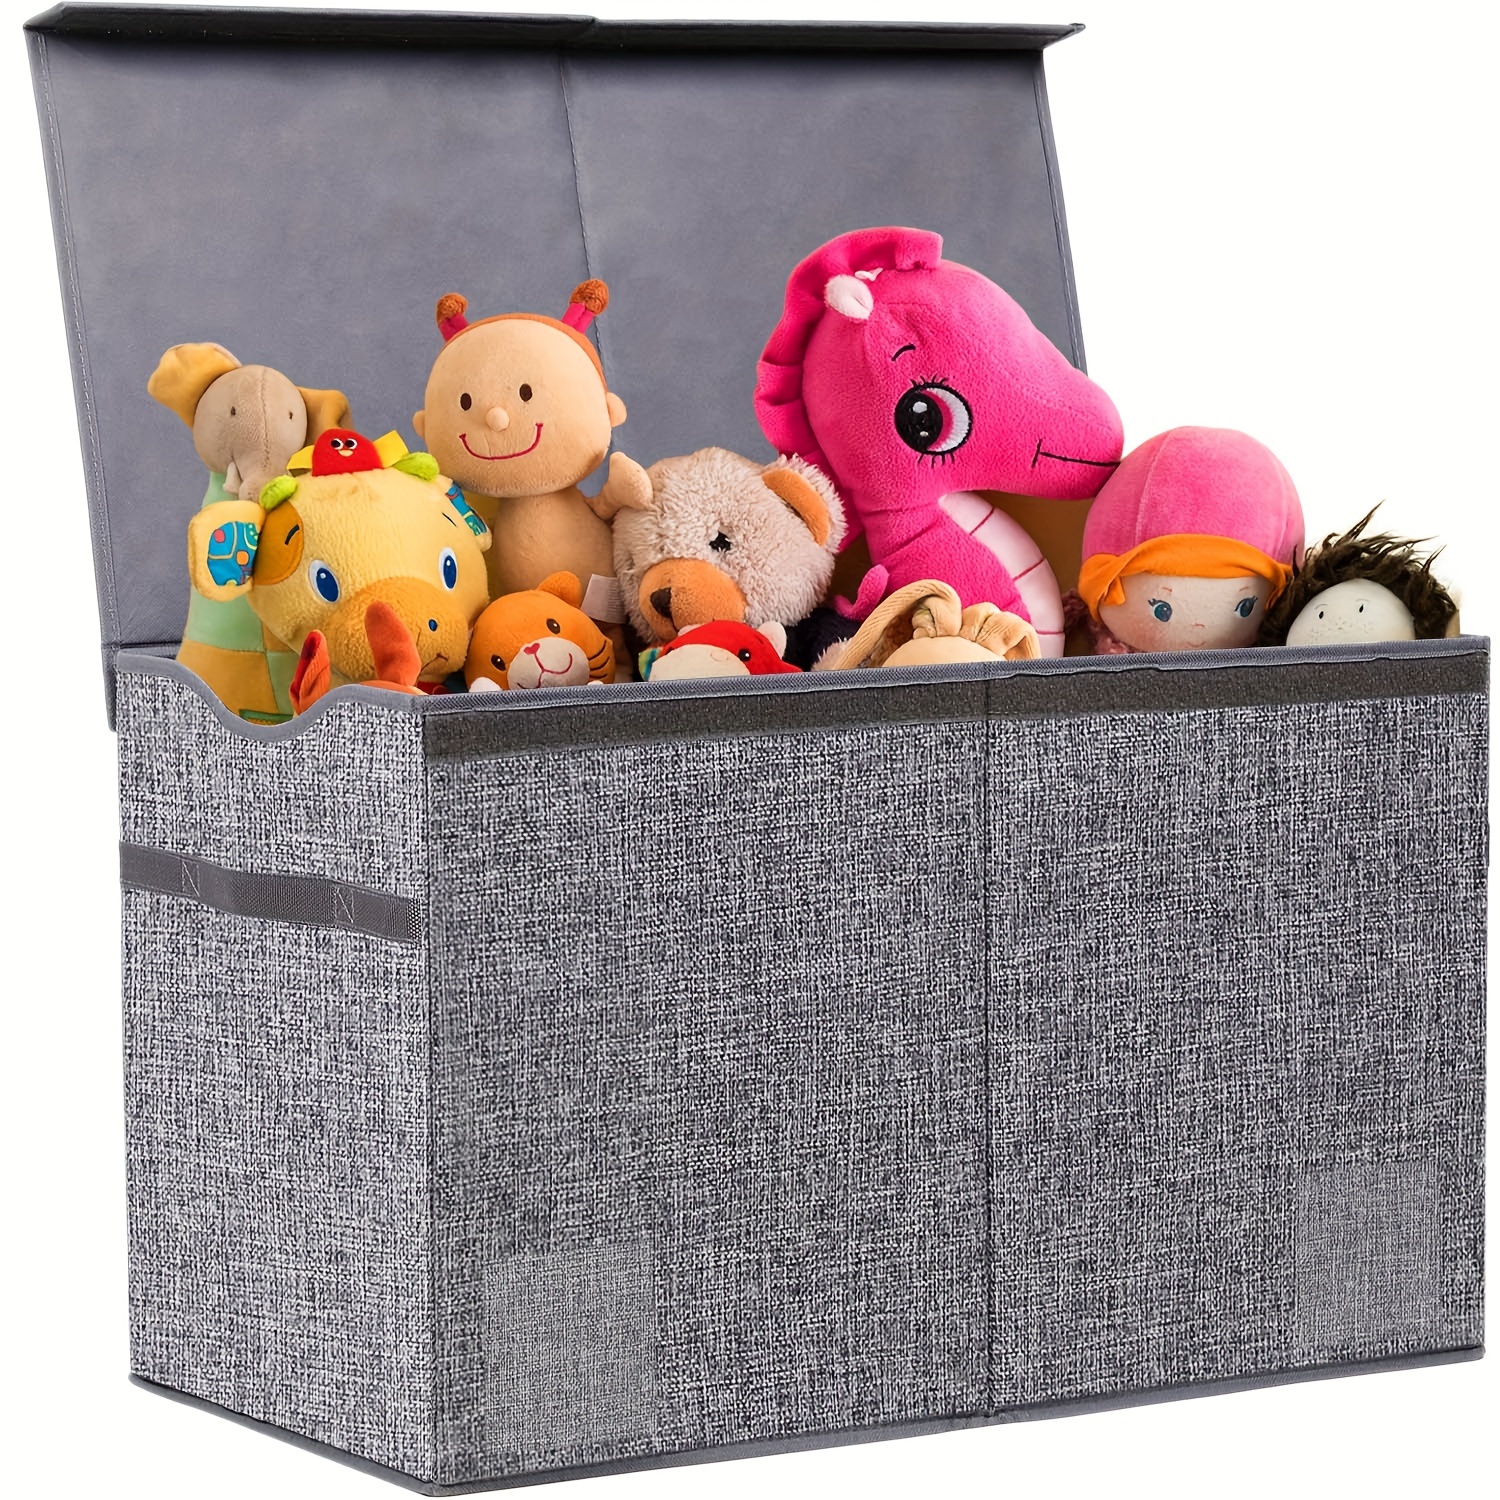 Toy Storage Organizer & Play Mat - XL Storage Bag/Box for Kids, Boys, Girls, Nursery, Playroom - Basket for Building Bricks/Blocks - Collapsible